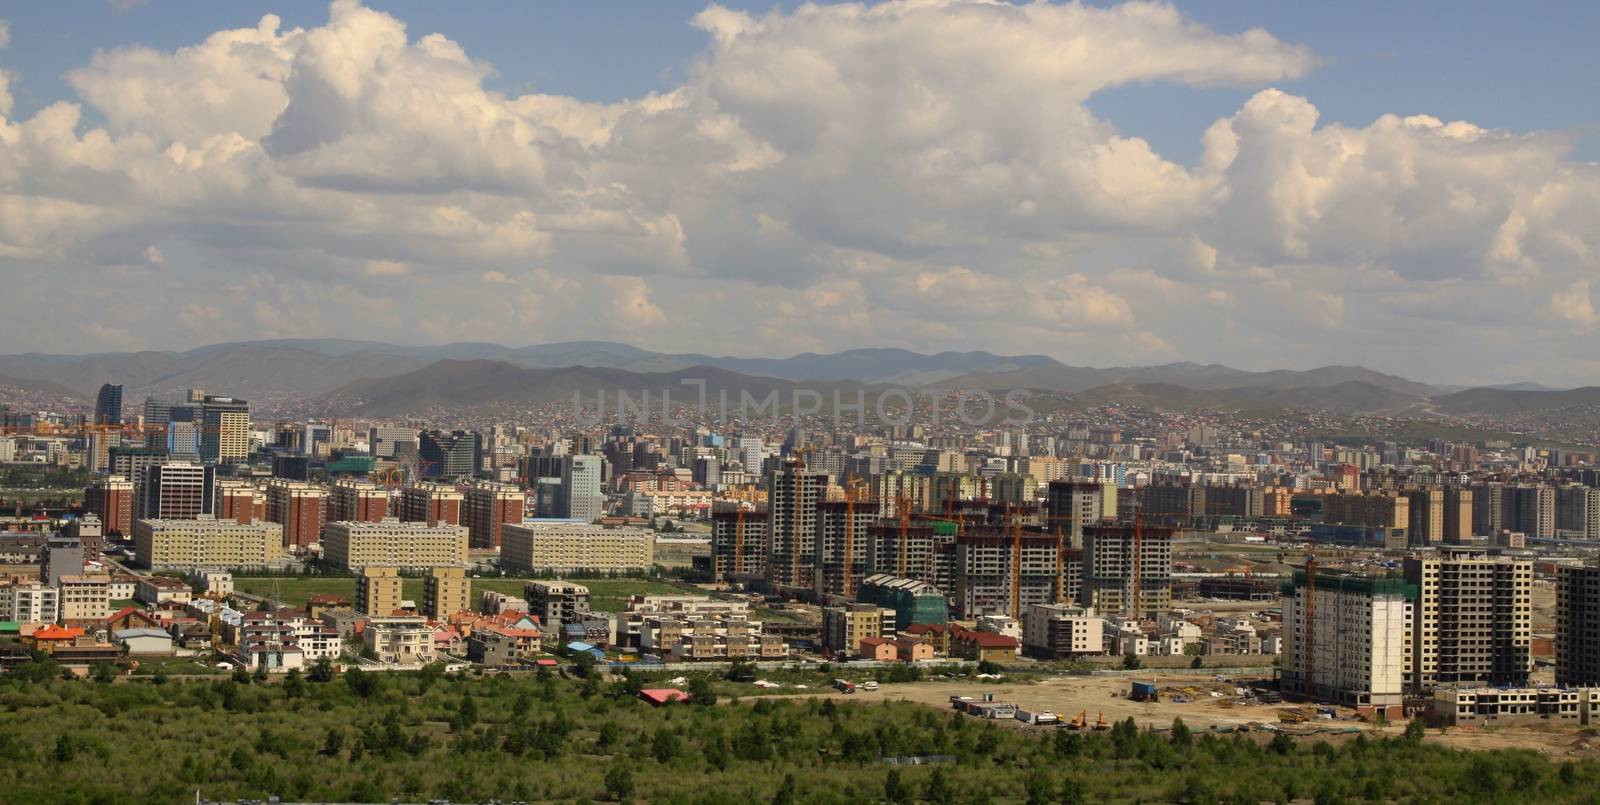 New buildings in the capital city Ulaanbaatar,Mongolia by jnerad